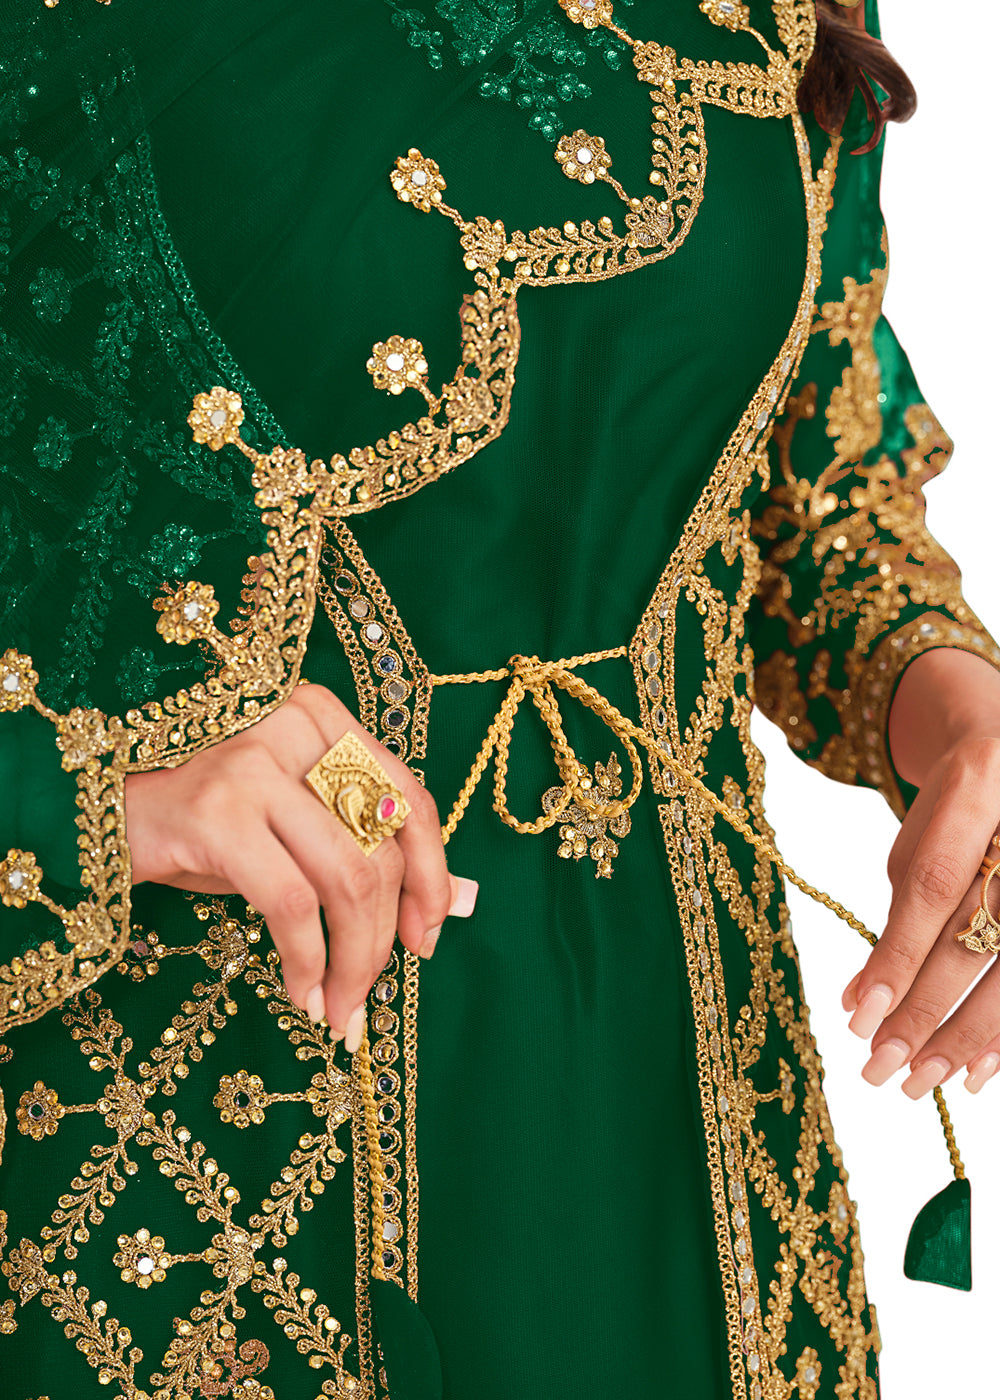 Buy Now Koti Style Elegant Green Patterned Festive Salwar Suit Online in USA, UK, Canada, Germany, Australia & Worldwide at Empress Clothing.